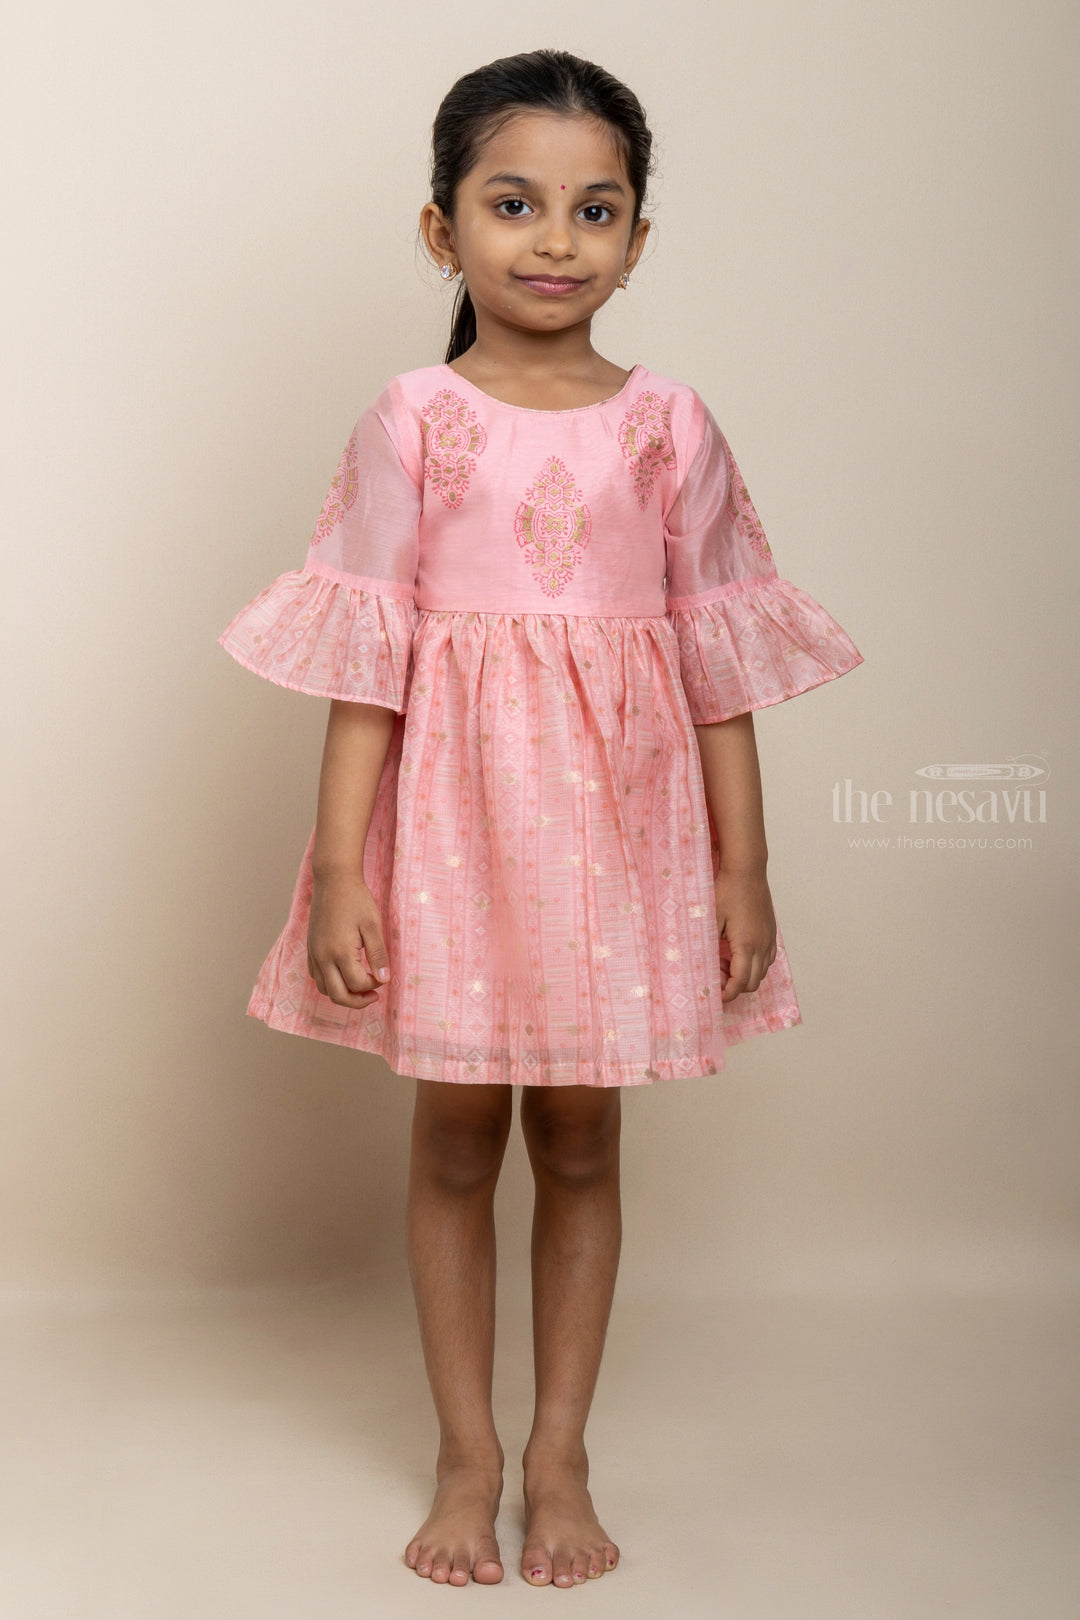 The Nesavu Frocks & Dresses Baby Pink Chanderi Silk Cotton Printed Festive Frock For Girls With Elbow Flutter Sleeve psr silks Nesavu 14 (6M) / Pink GFC940A